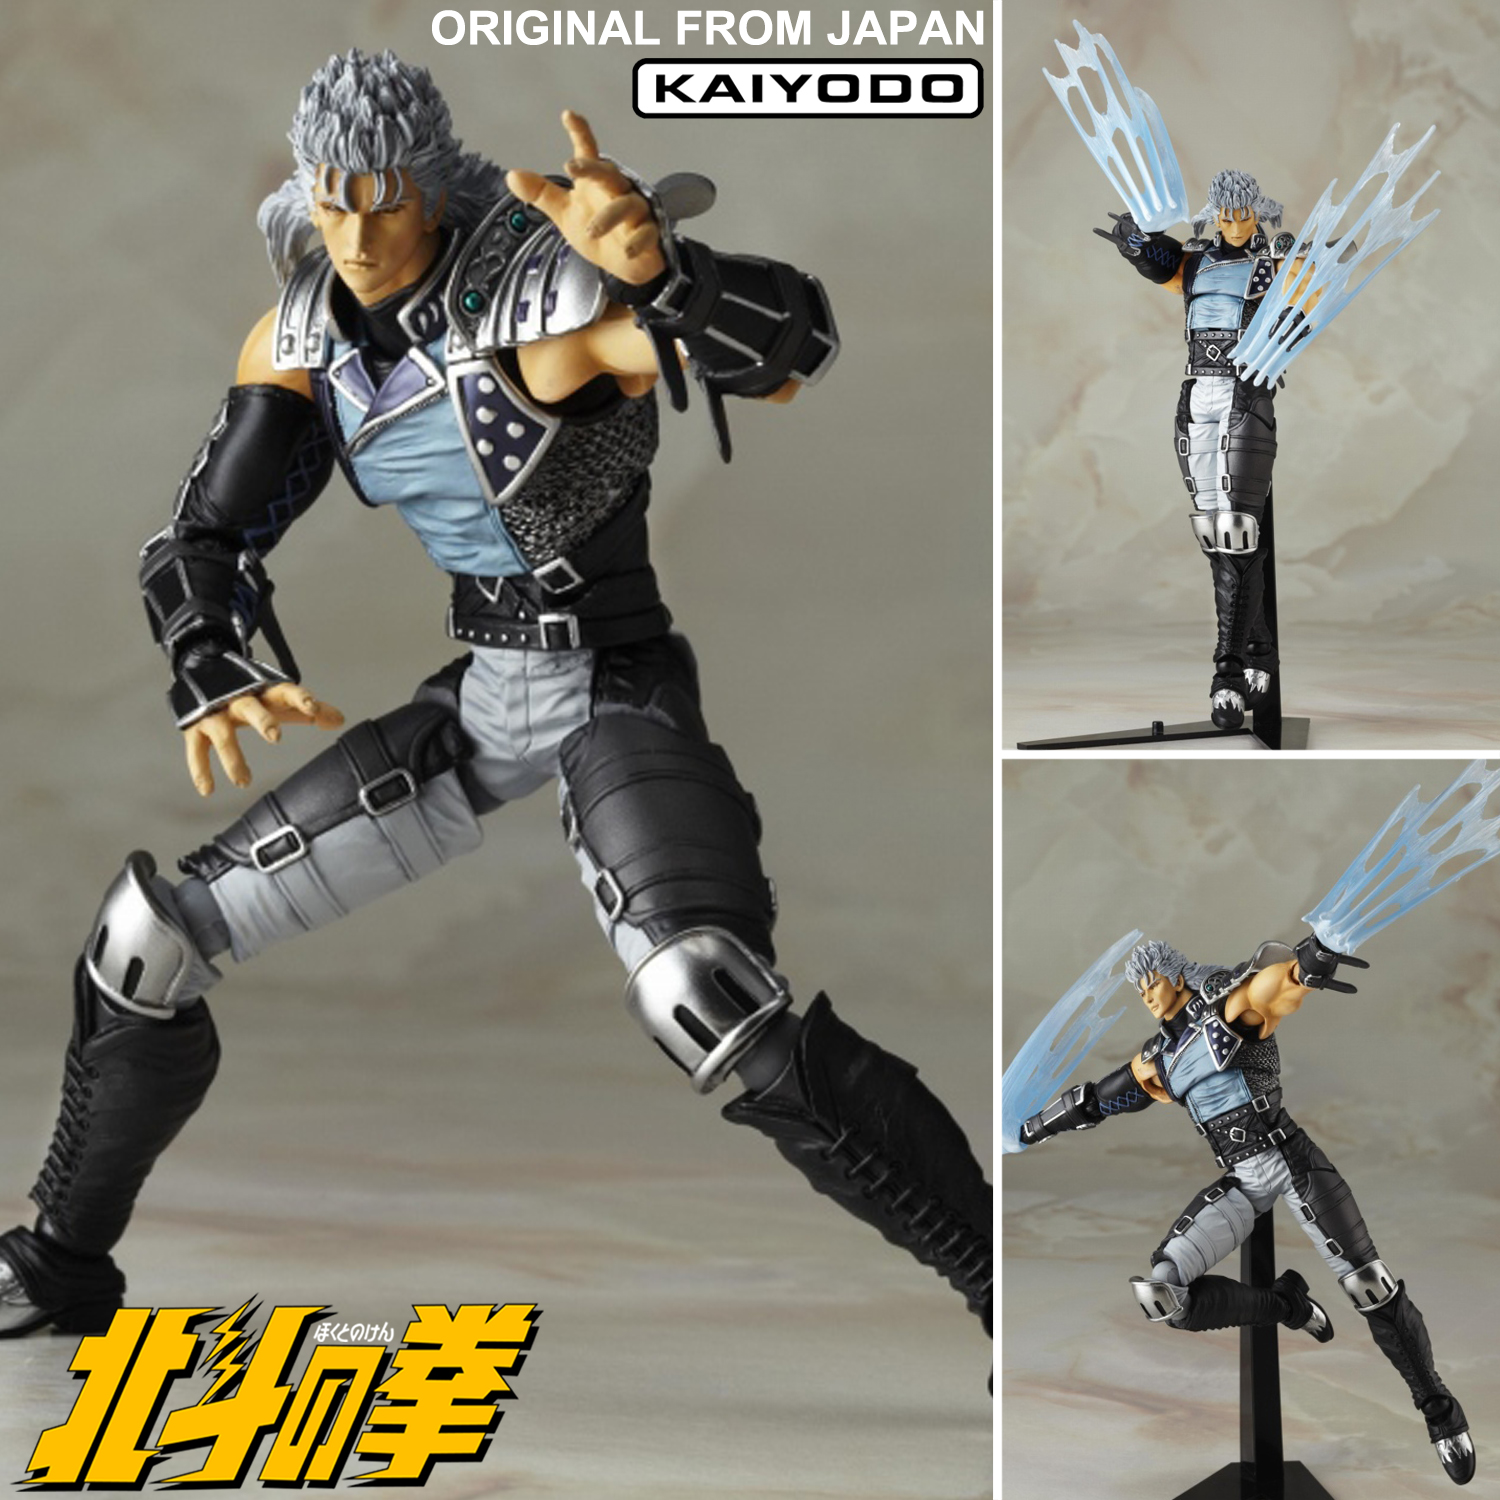 Model โมเดล ของแท้ 100% Kaiyodo จากเรื่อง ケンシロウ Revoltech Fist of the North Star เคนชิโร่ ฤทธิ์หมัดดาวเหนือ หมัดเทพเจ้าดาวเหนือ Rei เรย์ หมัดวิหกน้ำดาวใต้ Ver Original from Japan Figma ฟิกม่า Anime ขยับแขน-ขาได้ อนิเมะ การ์ตูน มังงะ manga Figure ฟิกเกอร์